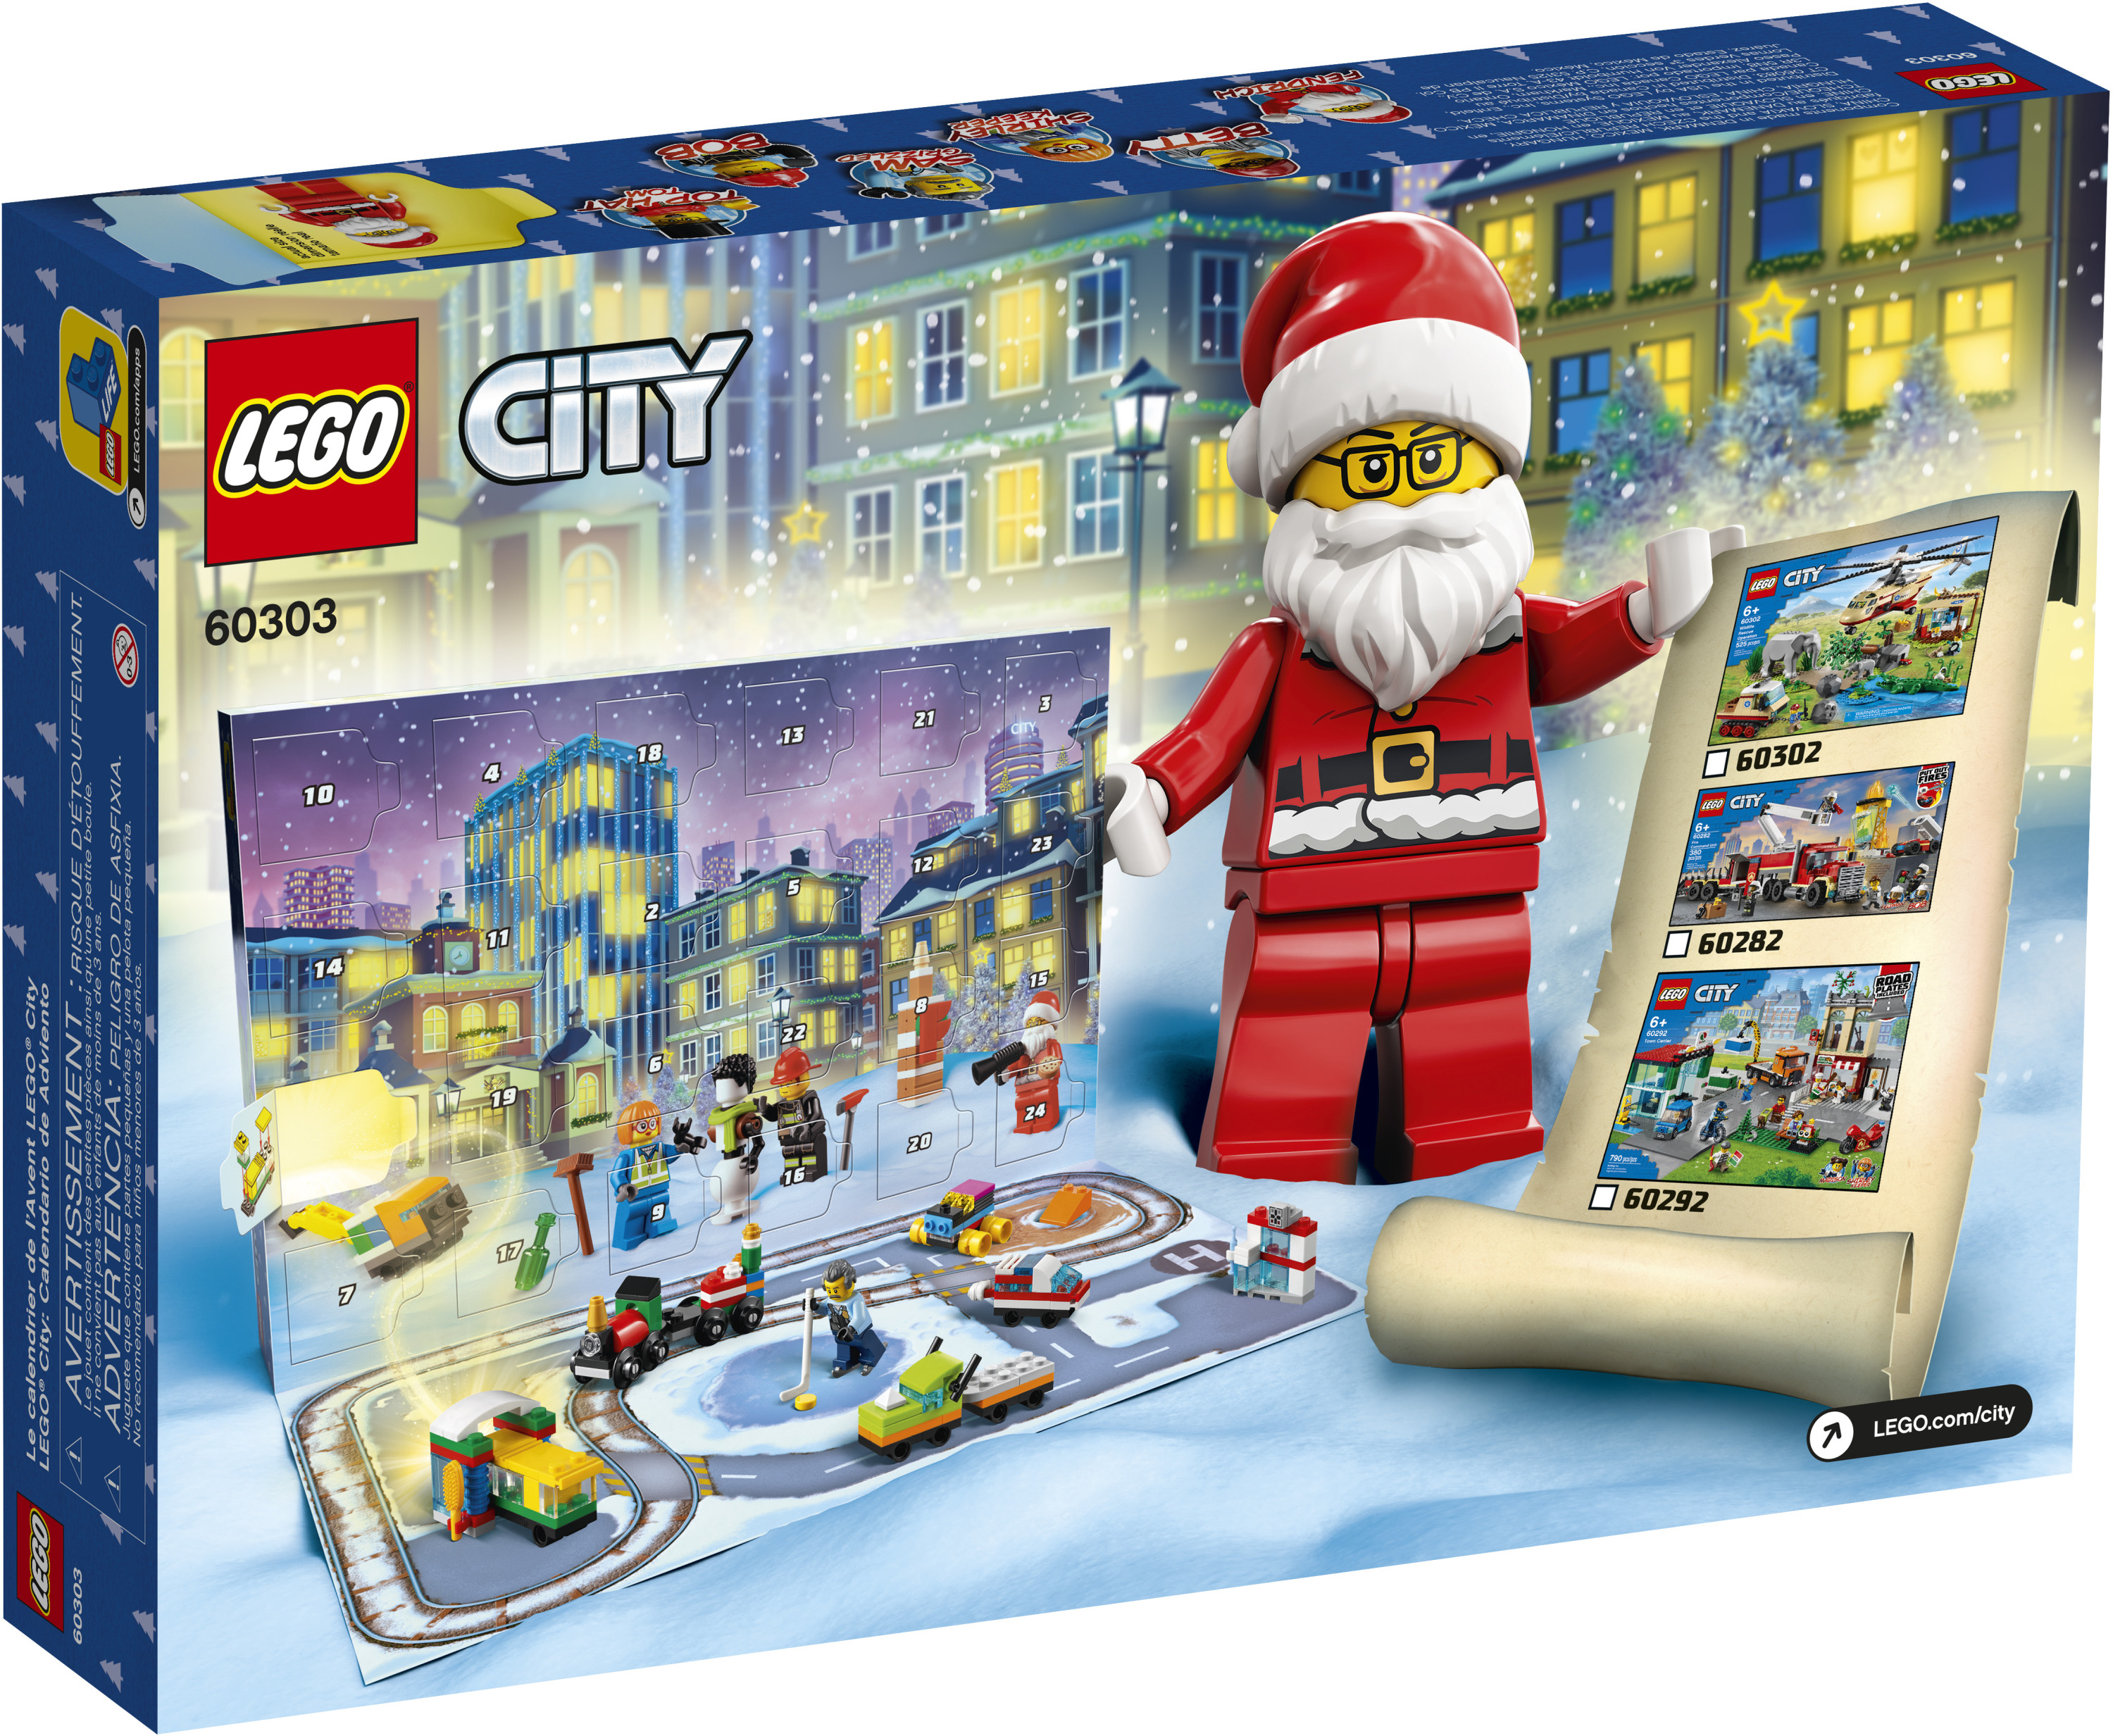 LEGO City Advent Calendar 60303 Building Toy (349 Pieces) - image 5 of 7